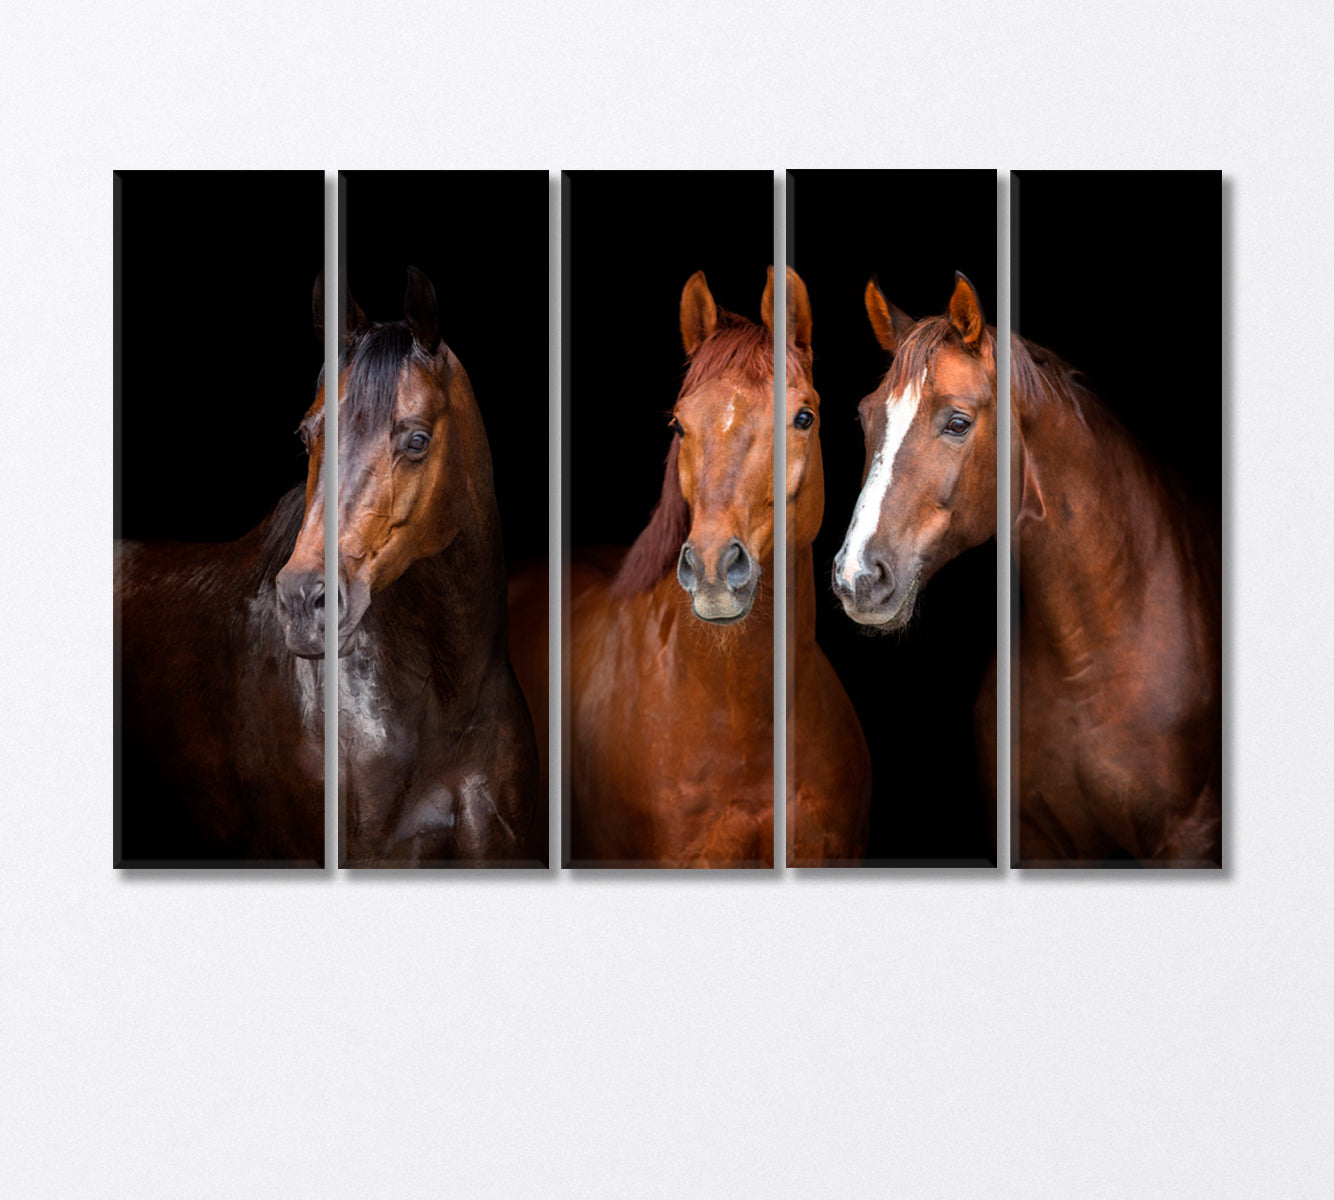 Portrait of Three Graceful Horses Canvas Print-Canvas Print-CetArt-5 Panels-36x24 inches-CetArt